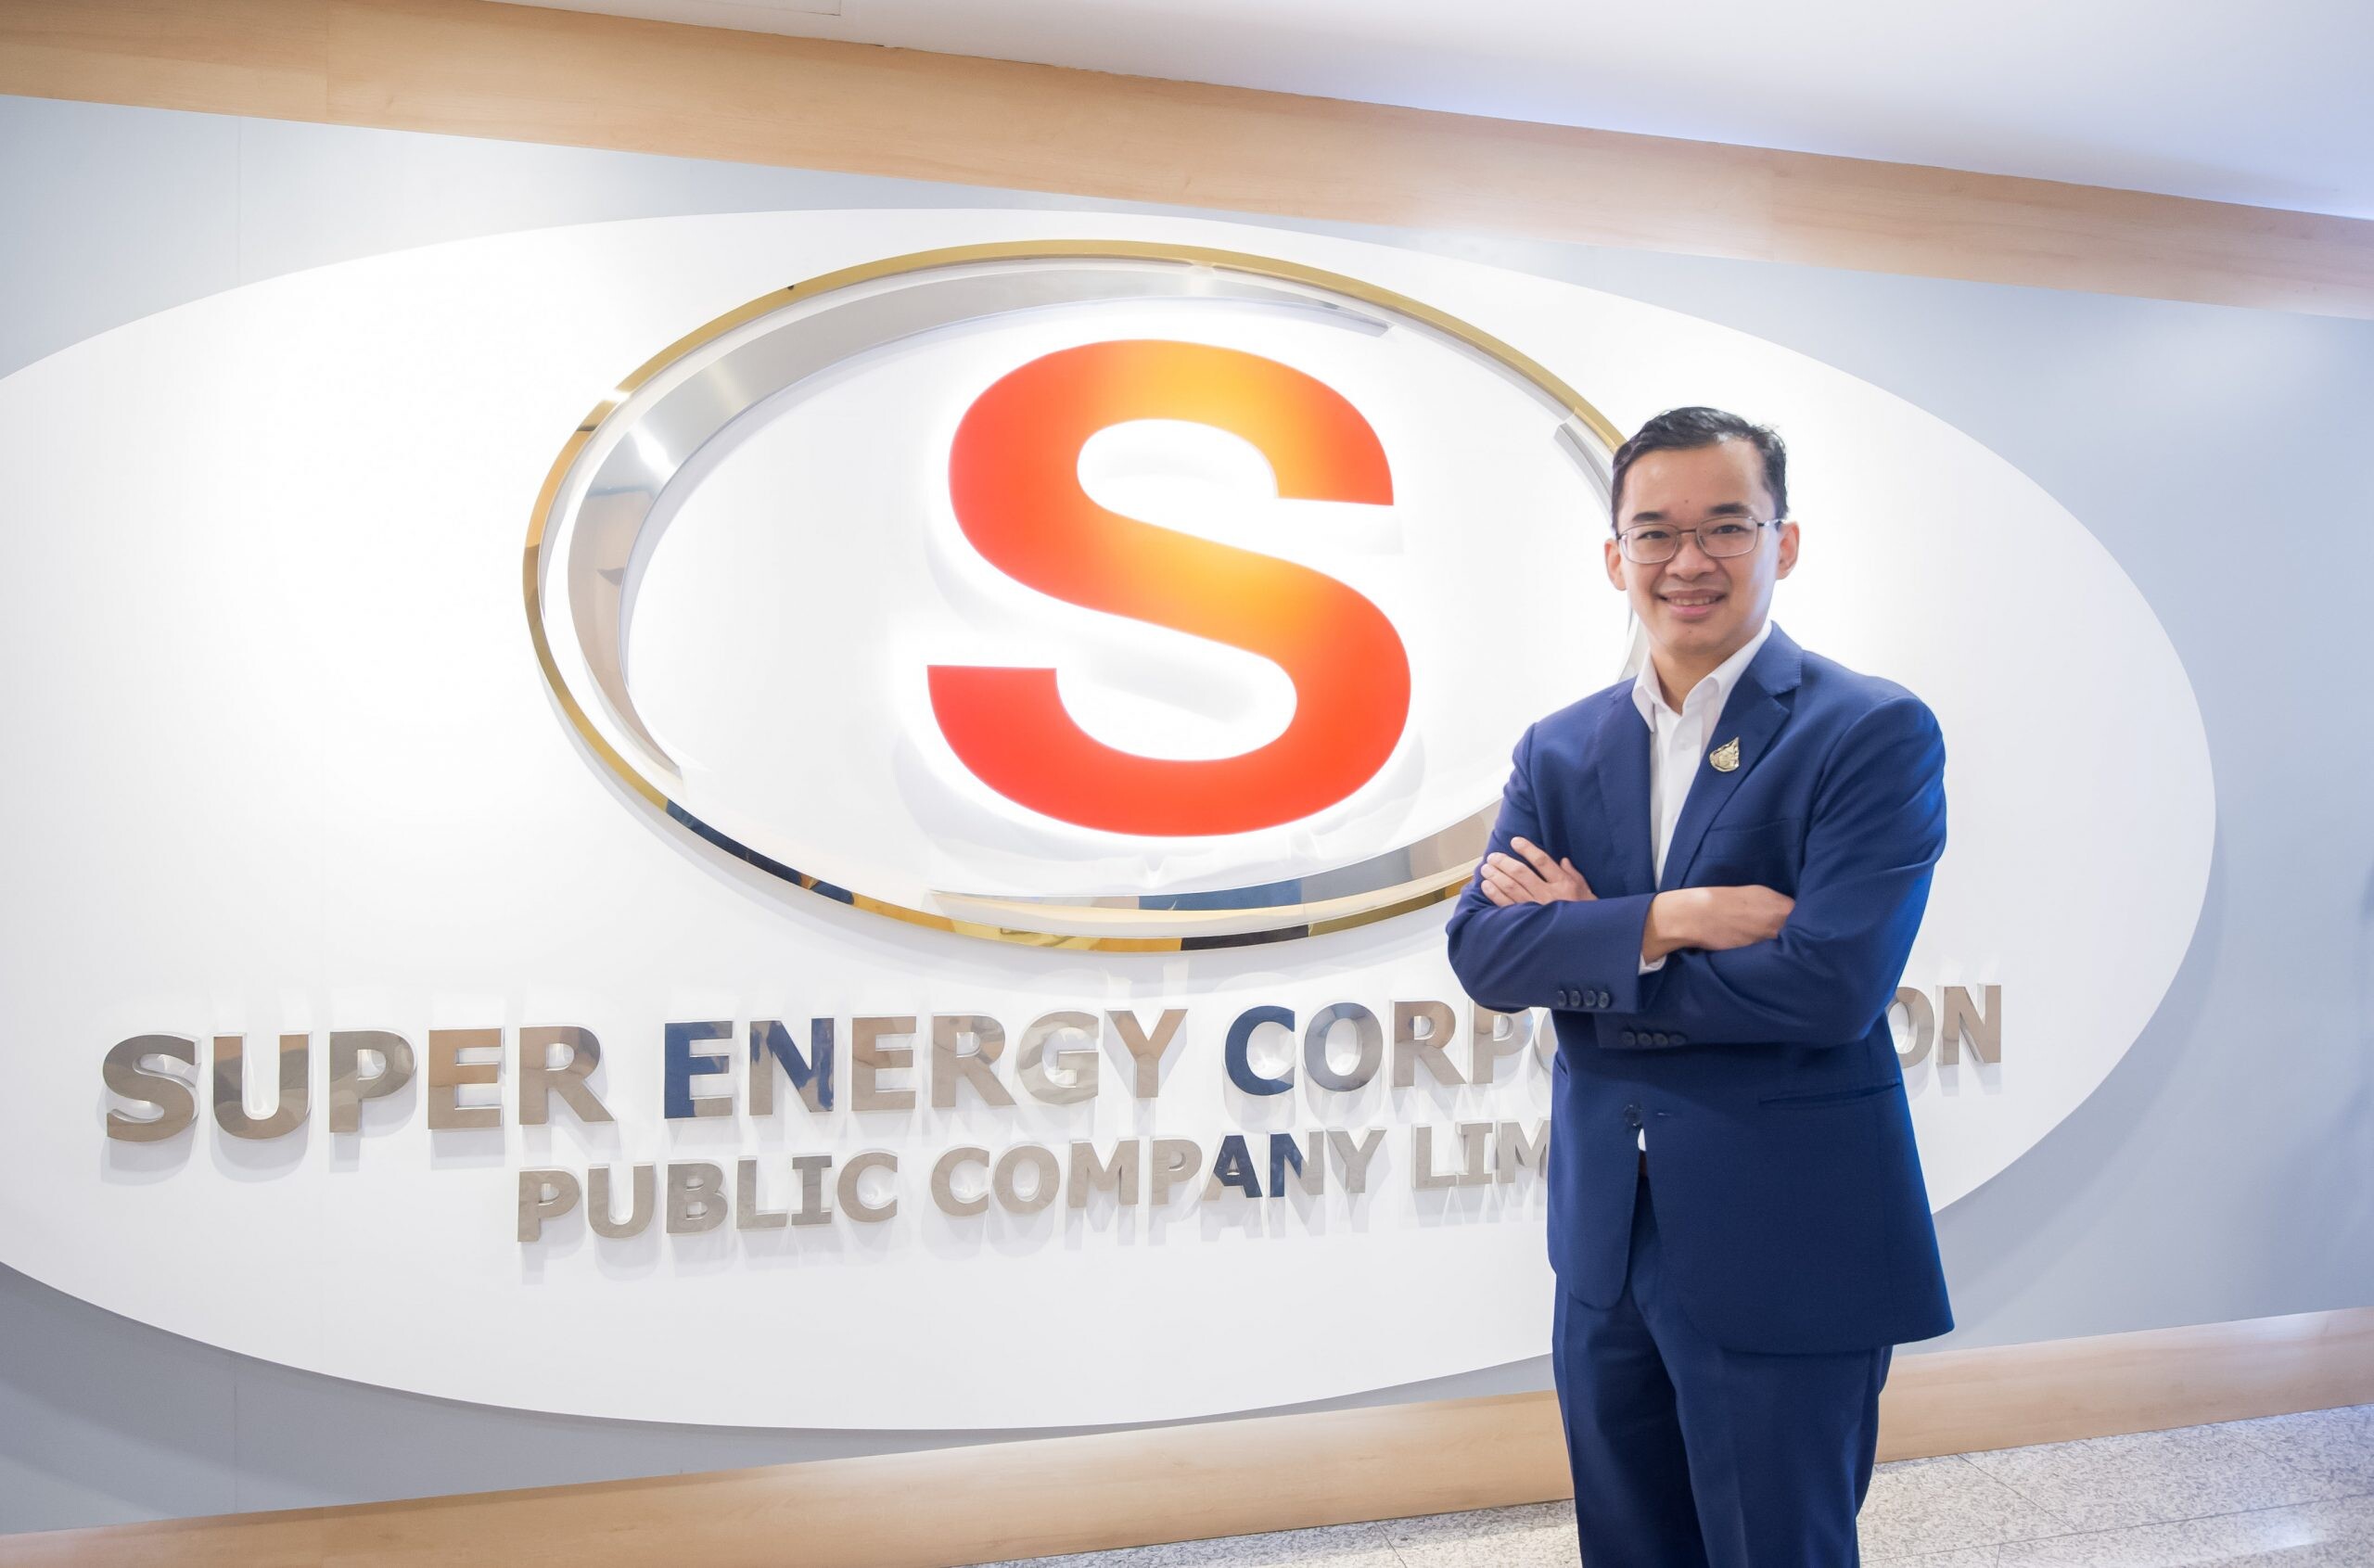 SUPER ดึง AC ENERGYเข้าร่วมถือหุ้น 49% โซลาร์ฟาร์มในประเทศเวียดนาม ยักษ์ใหญ่ด้านพลังงานทดแทนในฟิลิปปินส์ สร้าง Strategic Partner ขยายงานและพัฒนาโรงไฟฟ้าโซลาร์ฟาร์มในกลุ่มอาเซียน